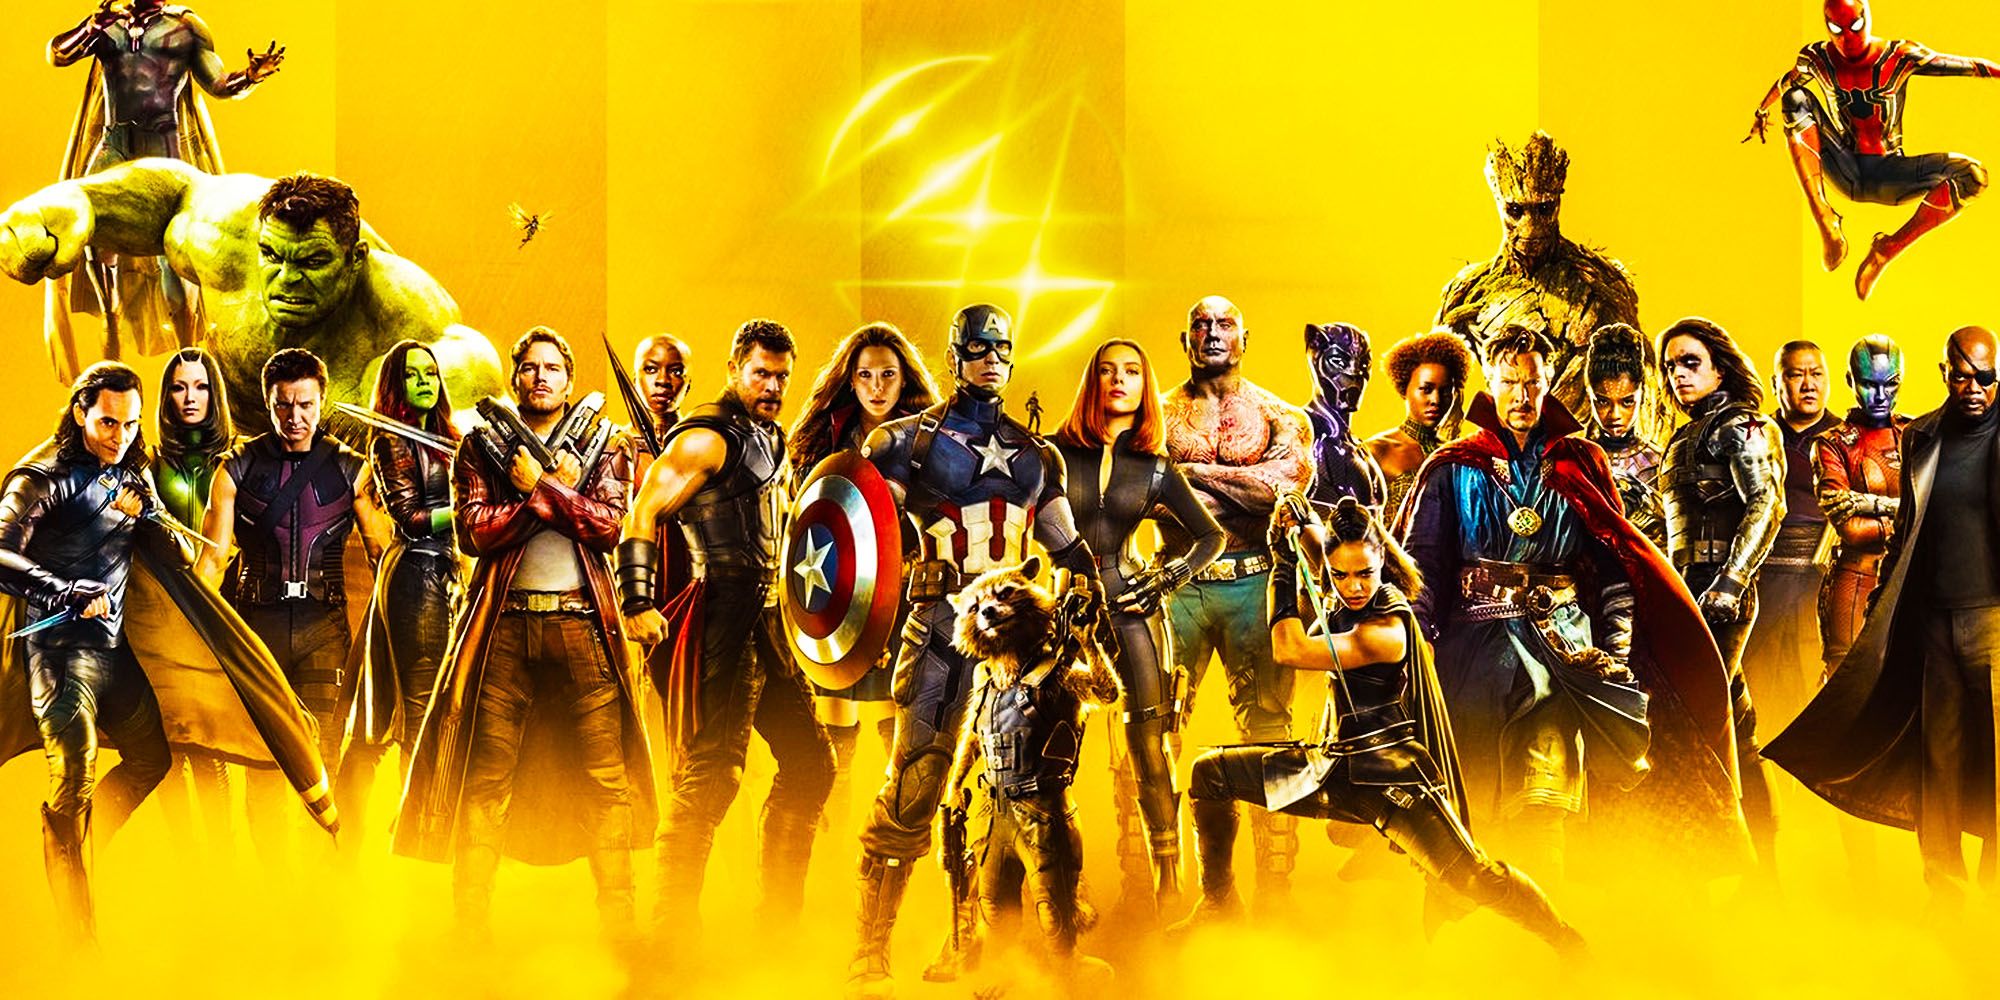 Almost Every Phase 4 Movie Has An AvengersLevel Superhero Team